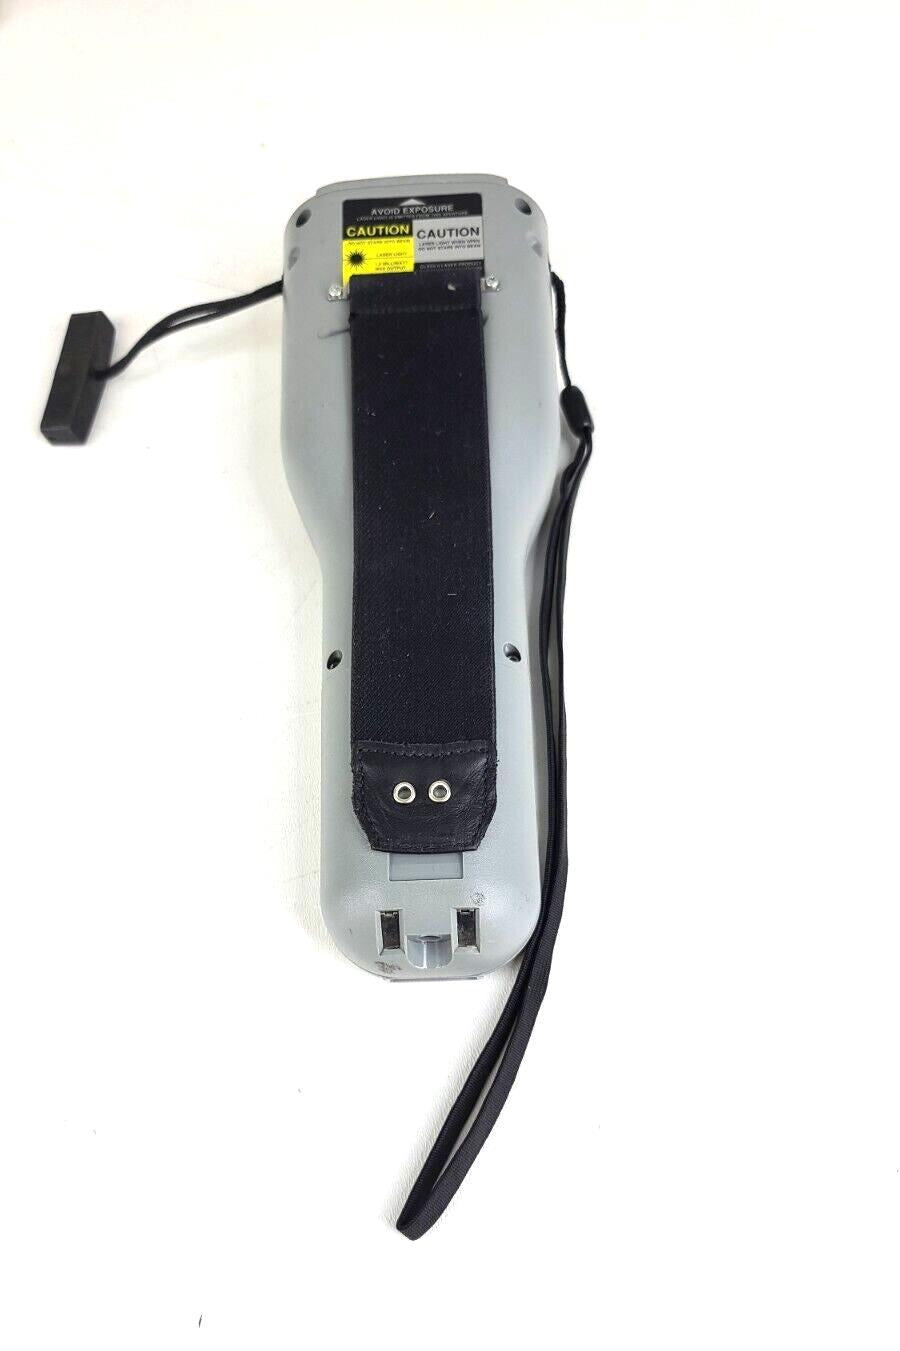 Lot of 2 Gray Telxon PTC-912 Handheld Computer Barcode Scanner